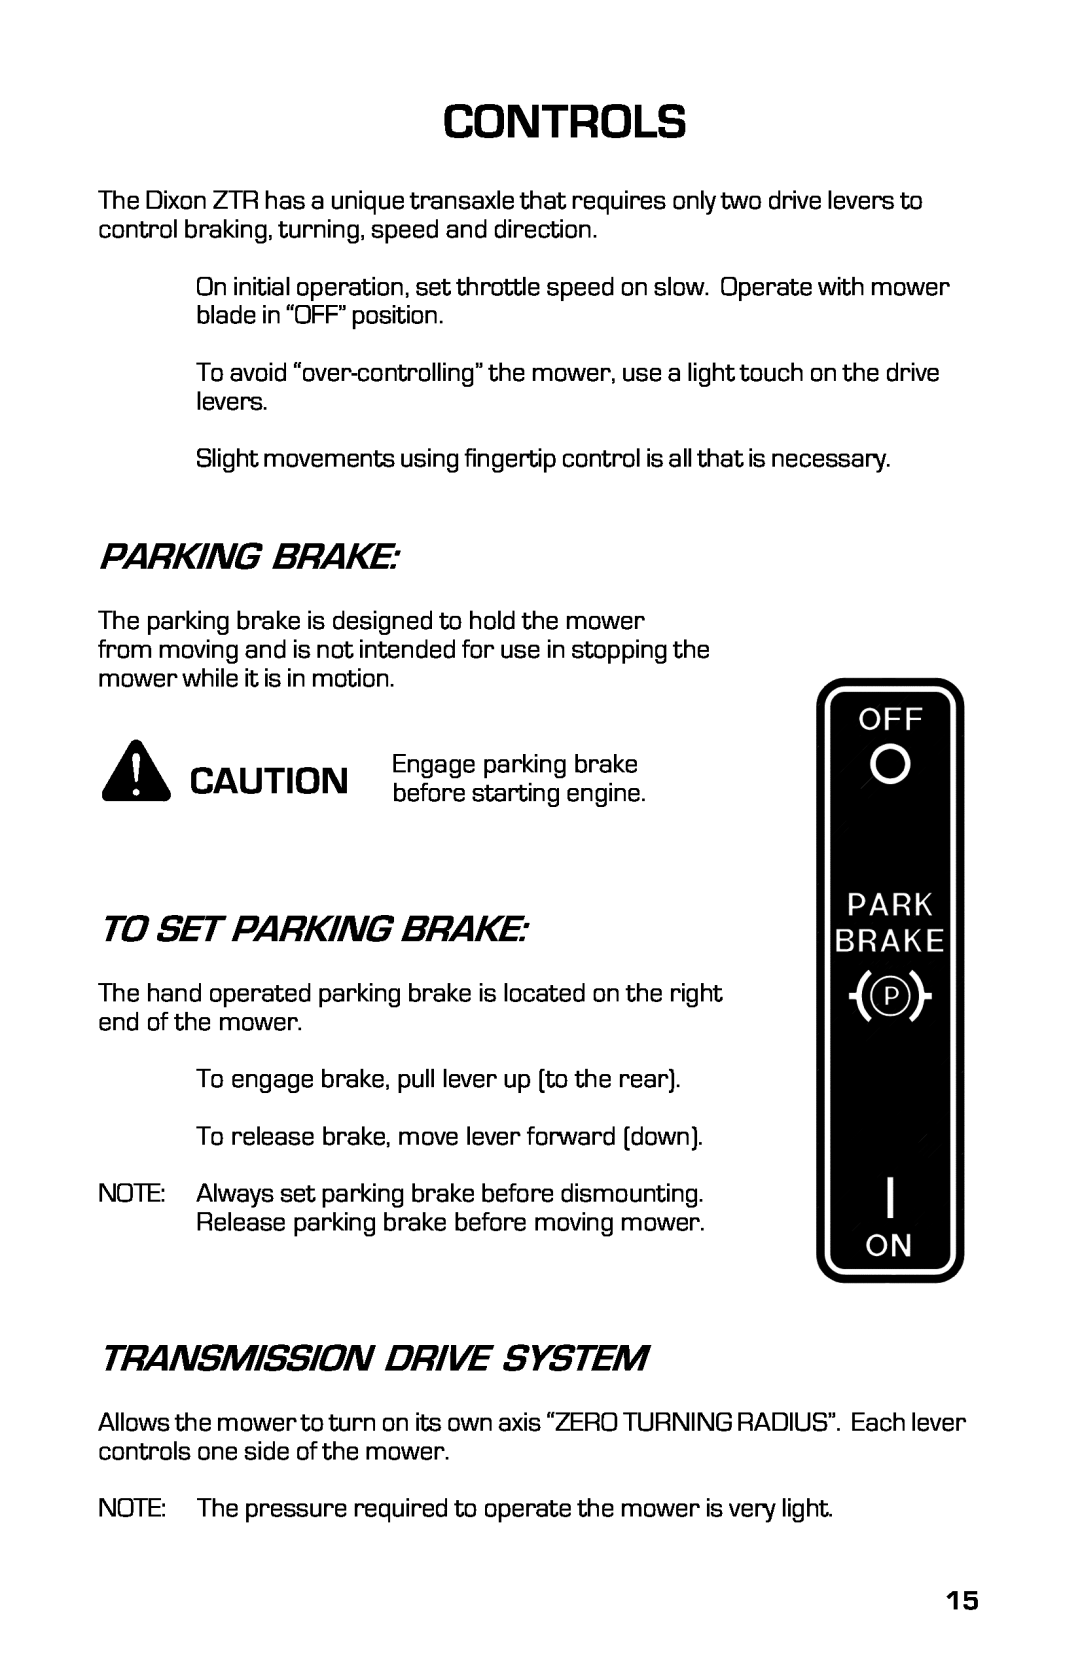 Dixon 13639-0702, 2003 manual Controls, To Set Parking Brake, Transmission Drive System 